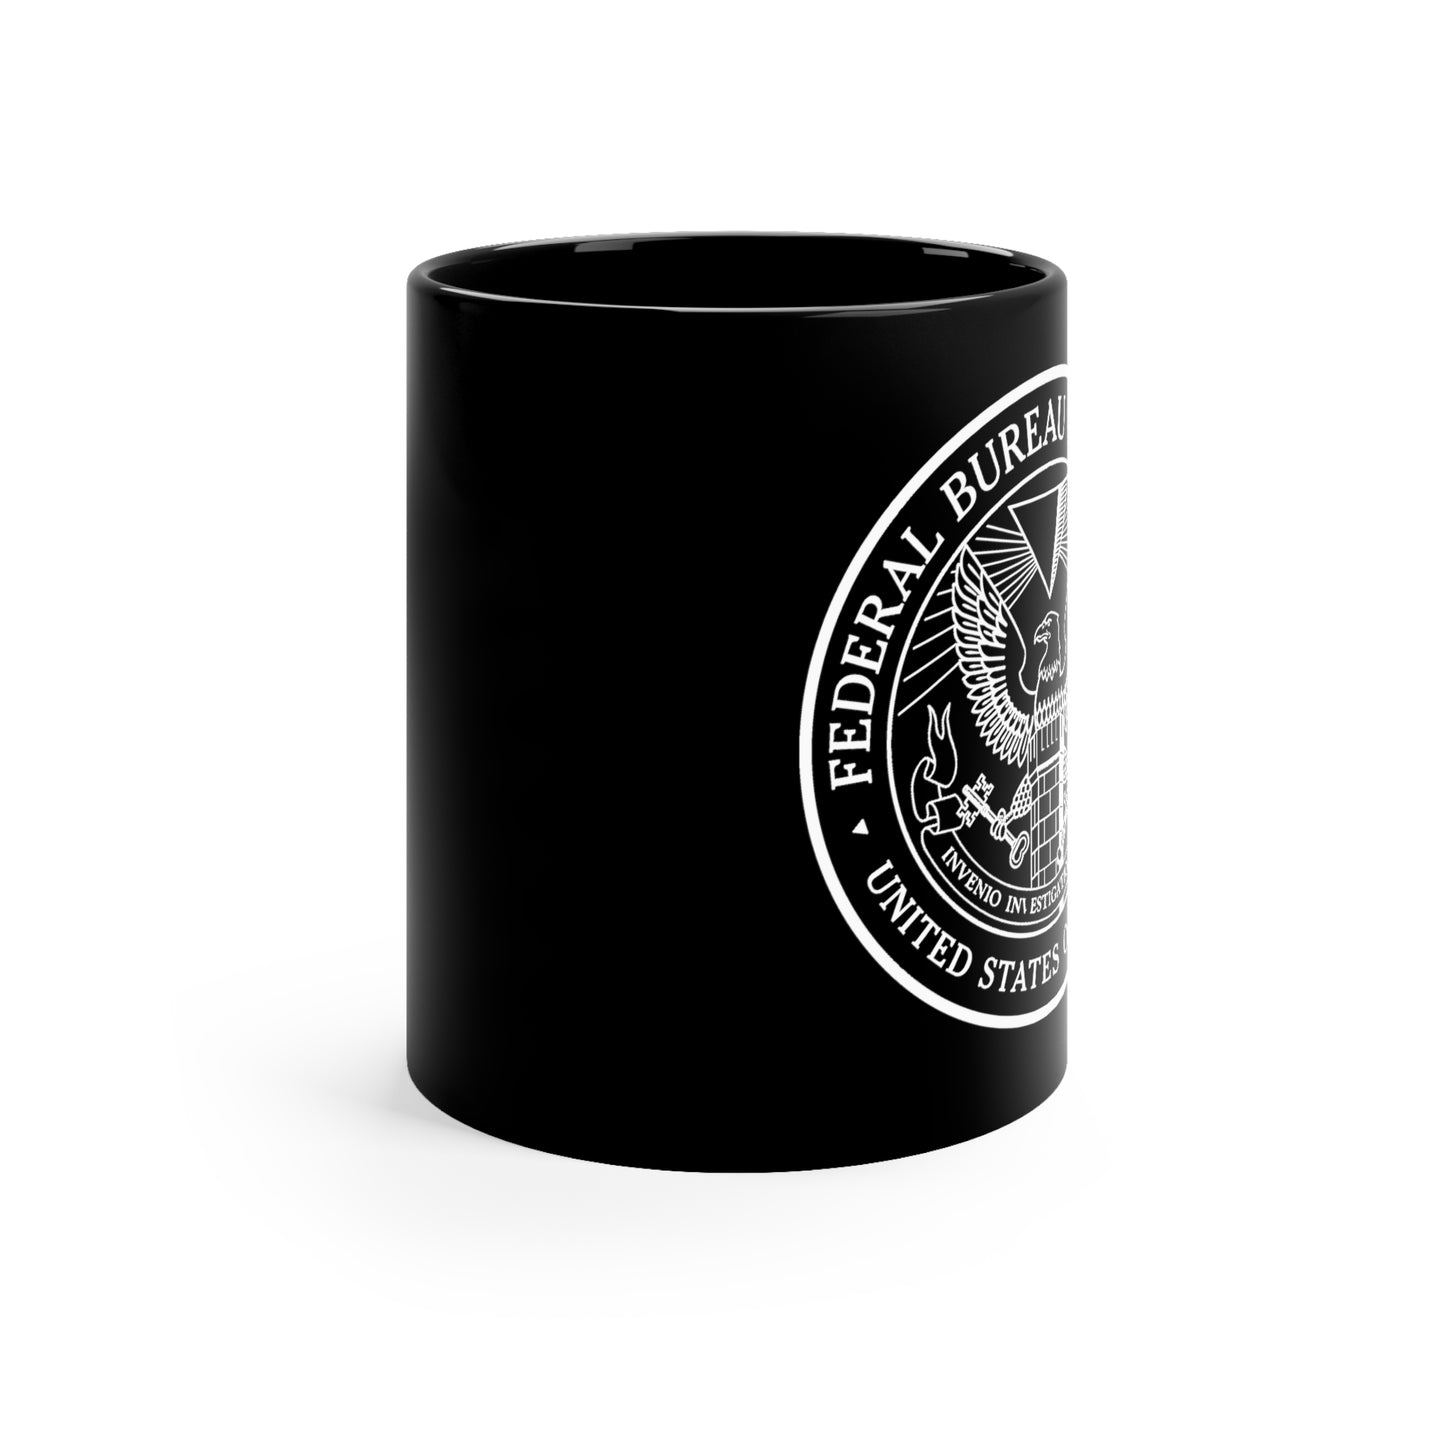 Control inspired FBC Federal Bureau of Control black coffee mug cup Lord and Lady Towers